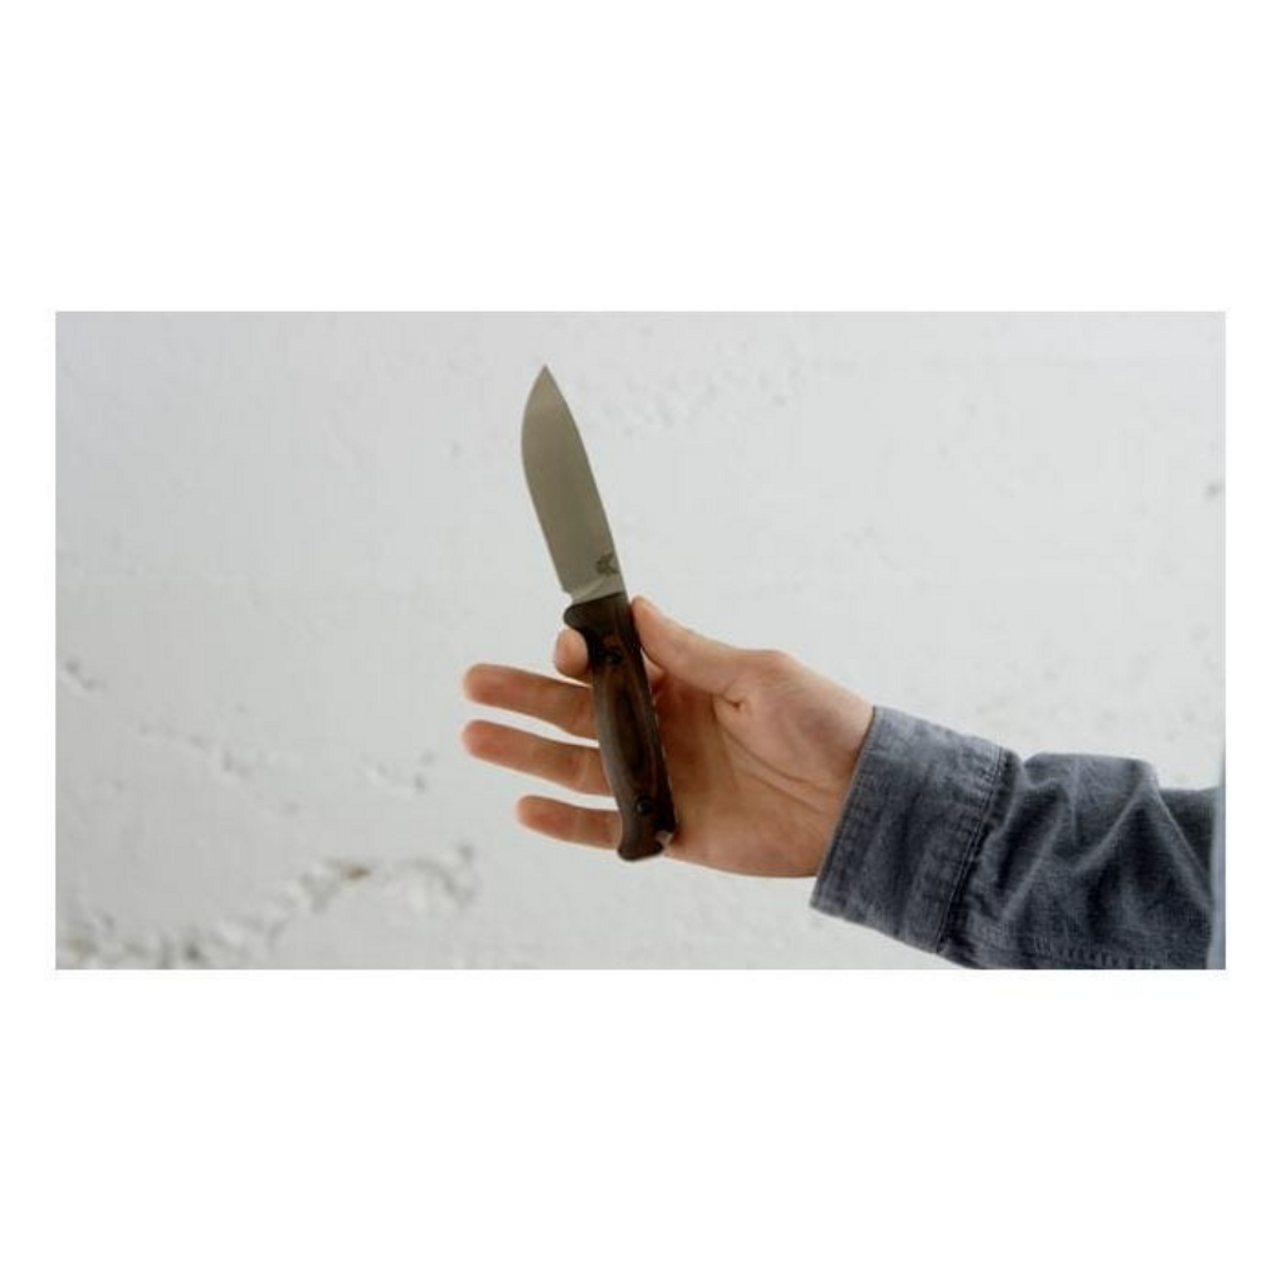 Saddle Mountain Skinner Knife